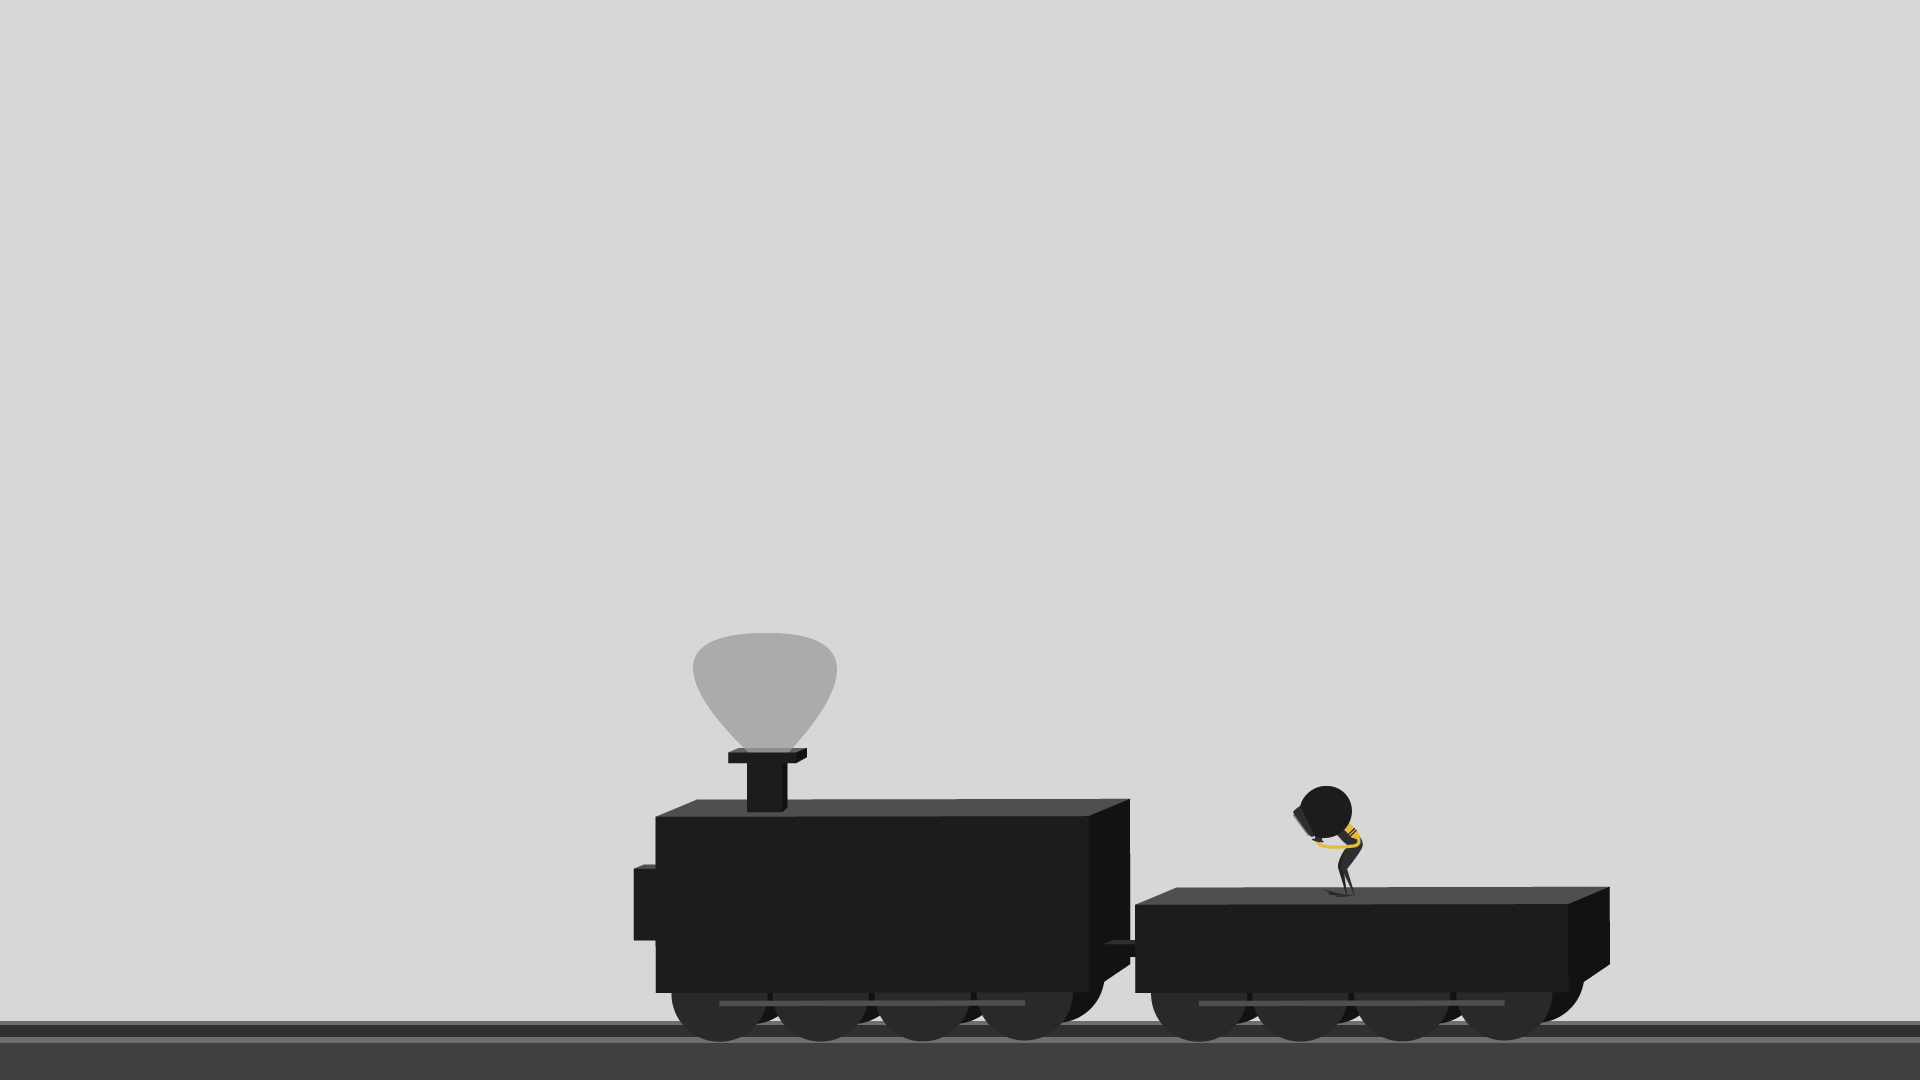 The_locomotive_11